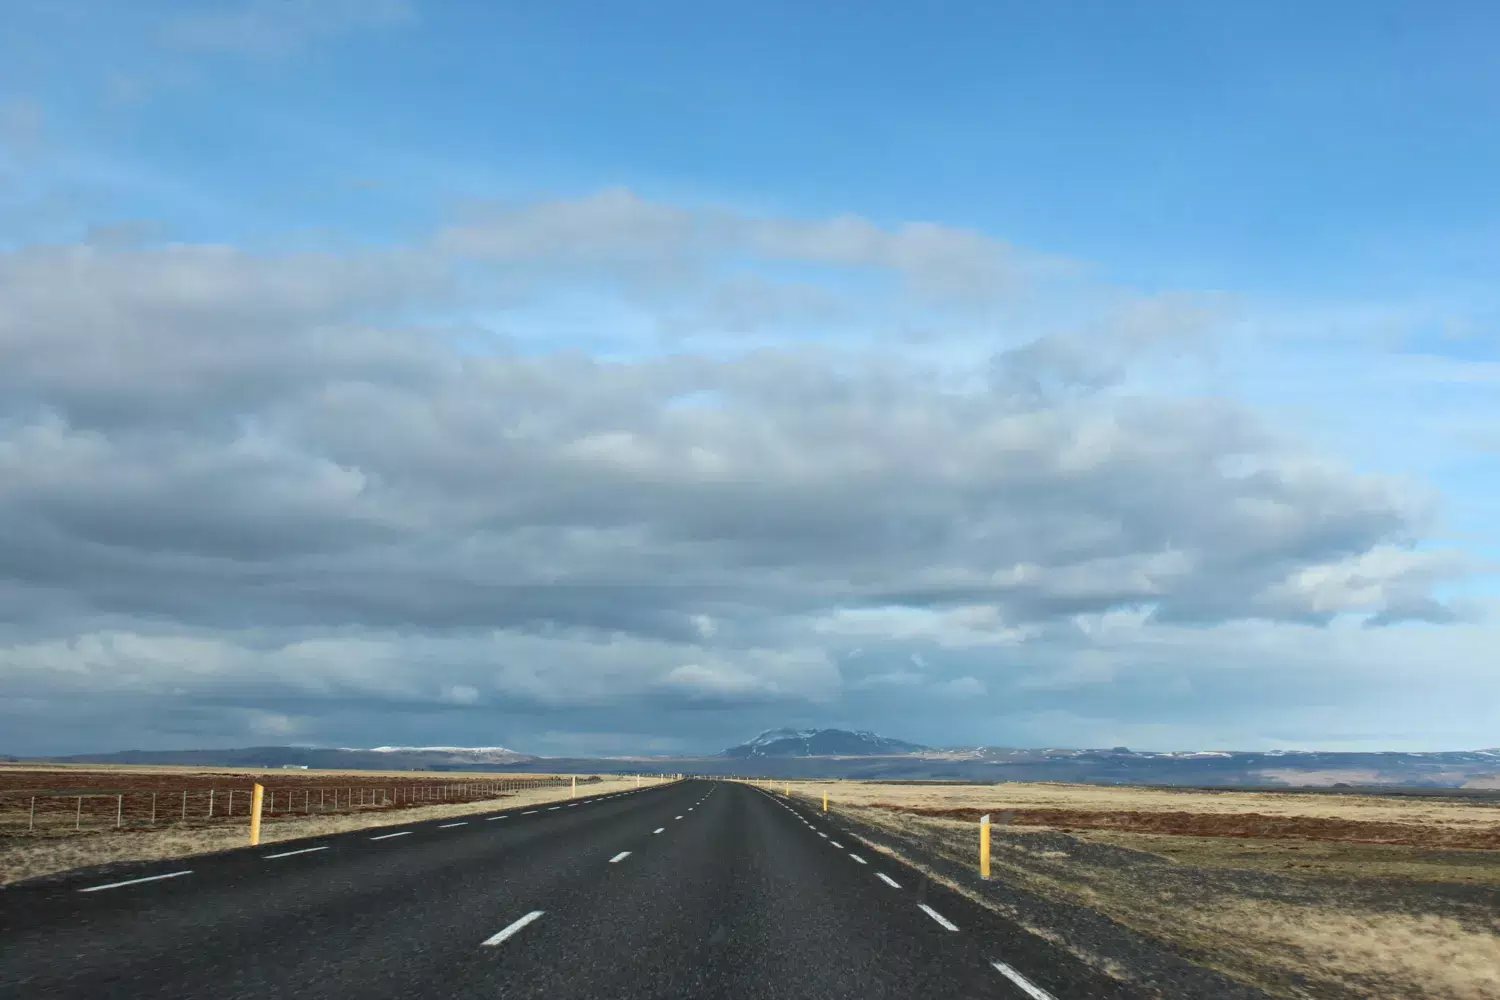 A desolate road in a barren environment